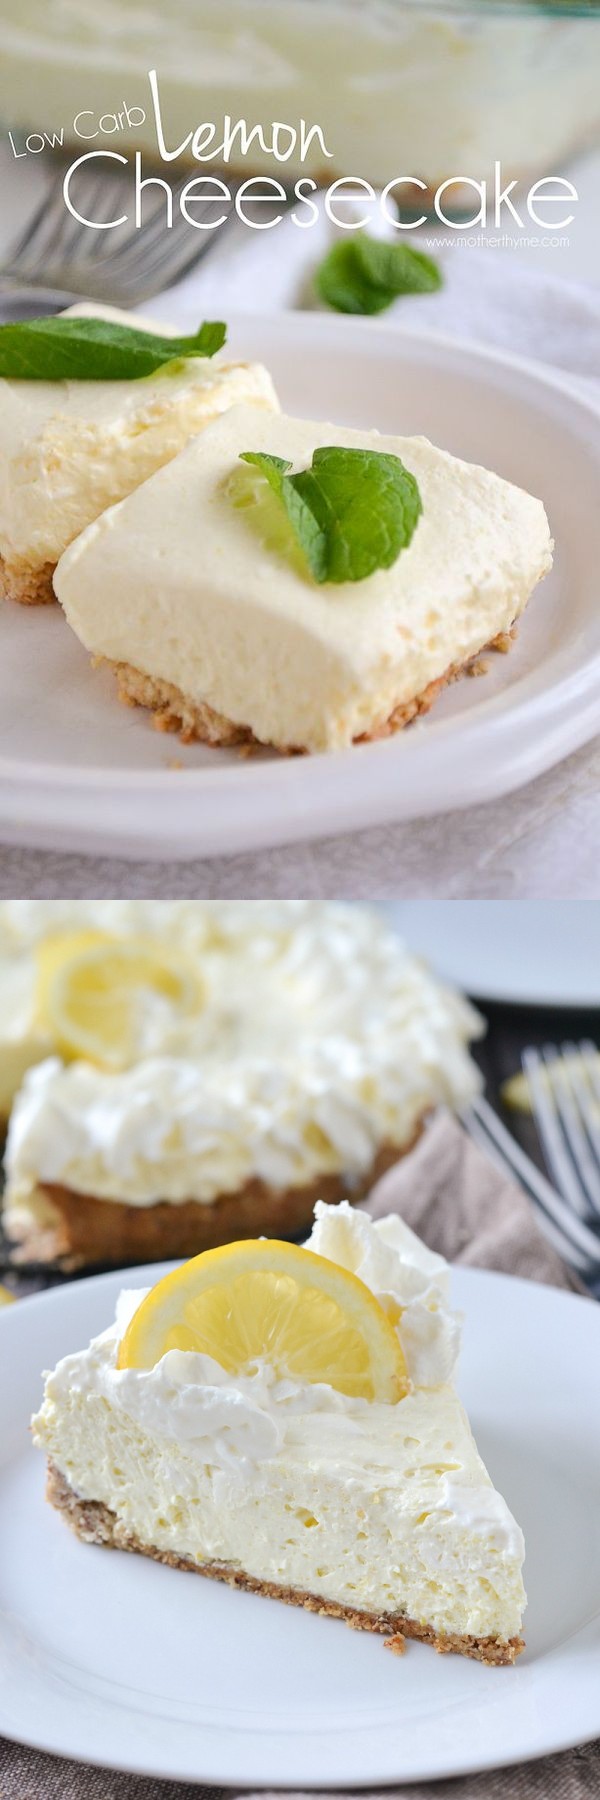 Low Carb Lemon Cheesecake